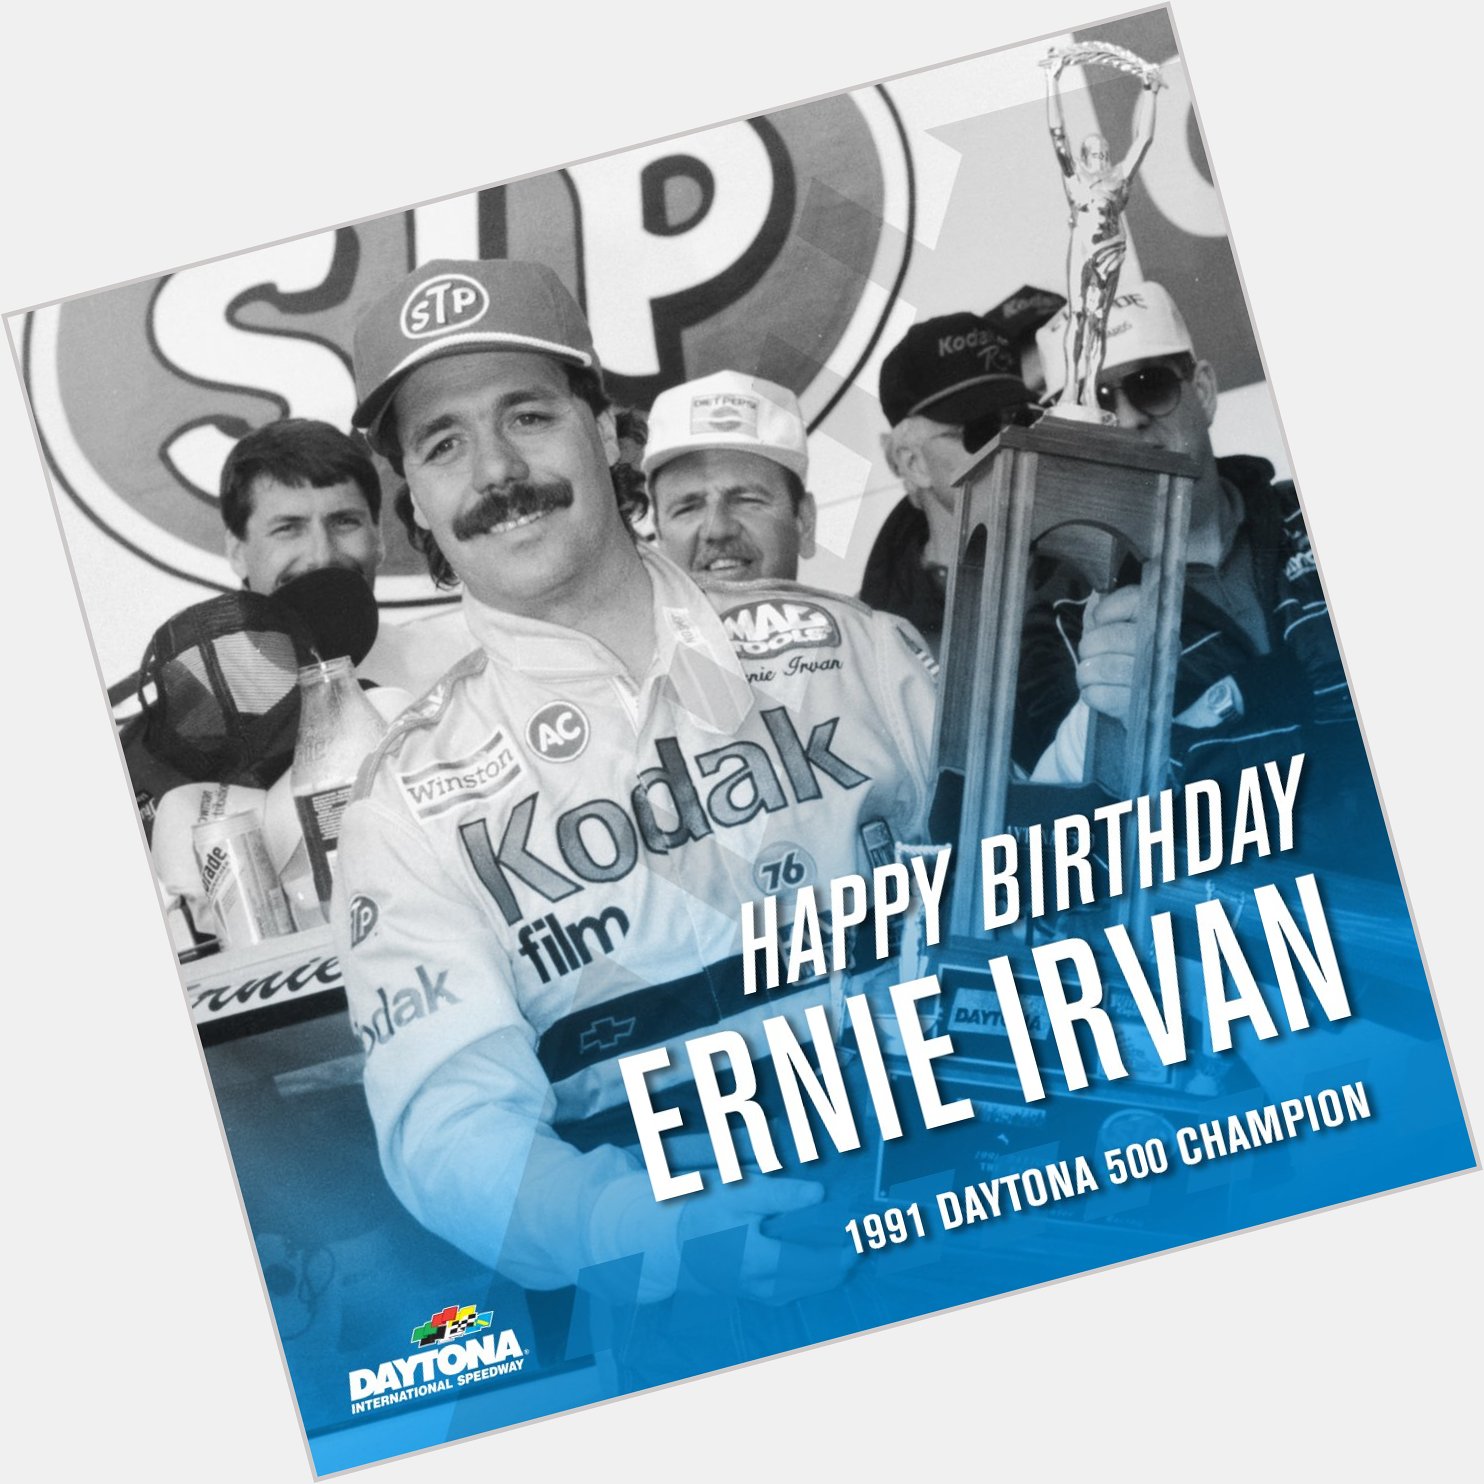 Happy birthday to the 1991 Champion Ernie Irvan! 